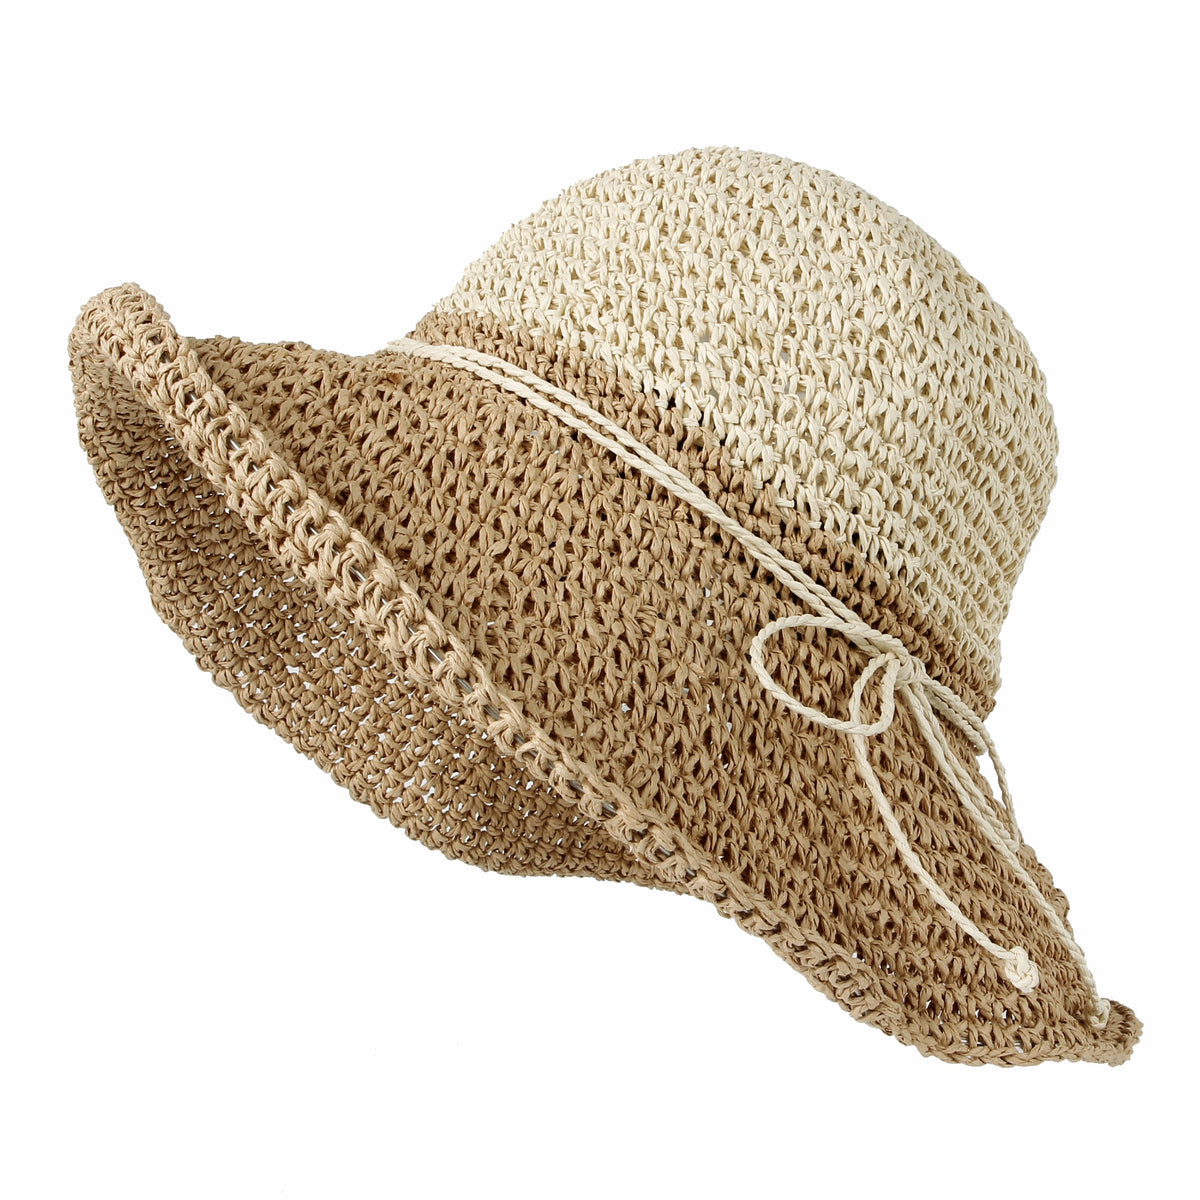 Comhats Upf 50 Wide Brim Floppy Sun Hats For Women Ladies Summer Straw Sunhat